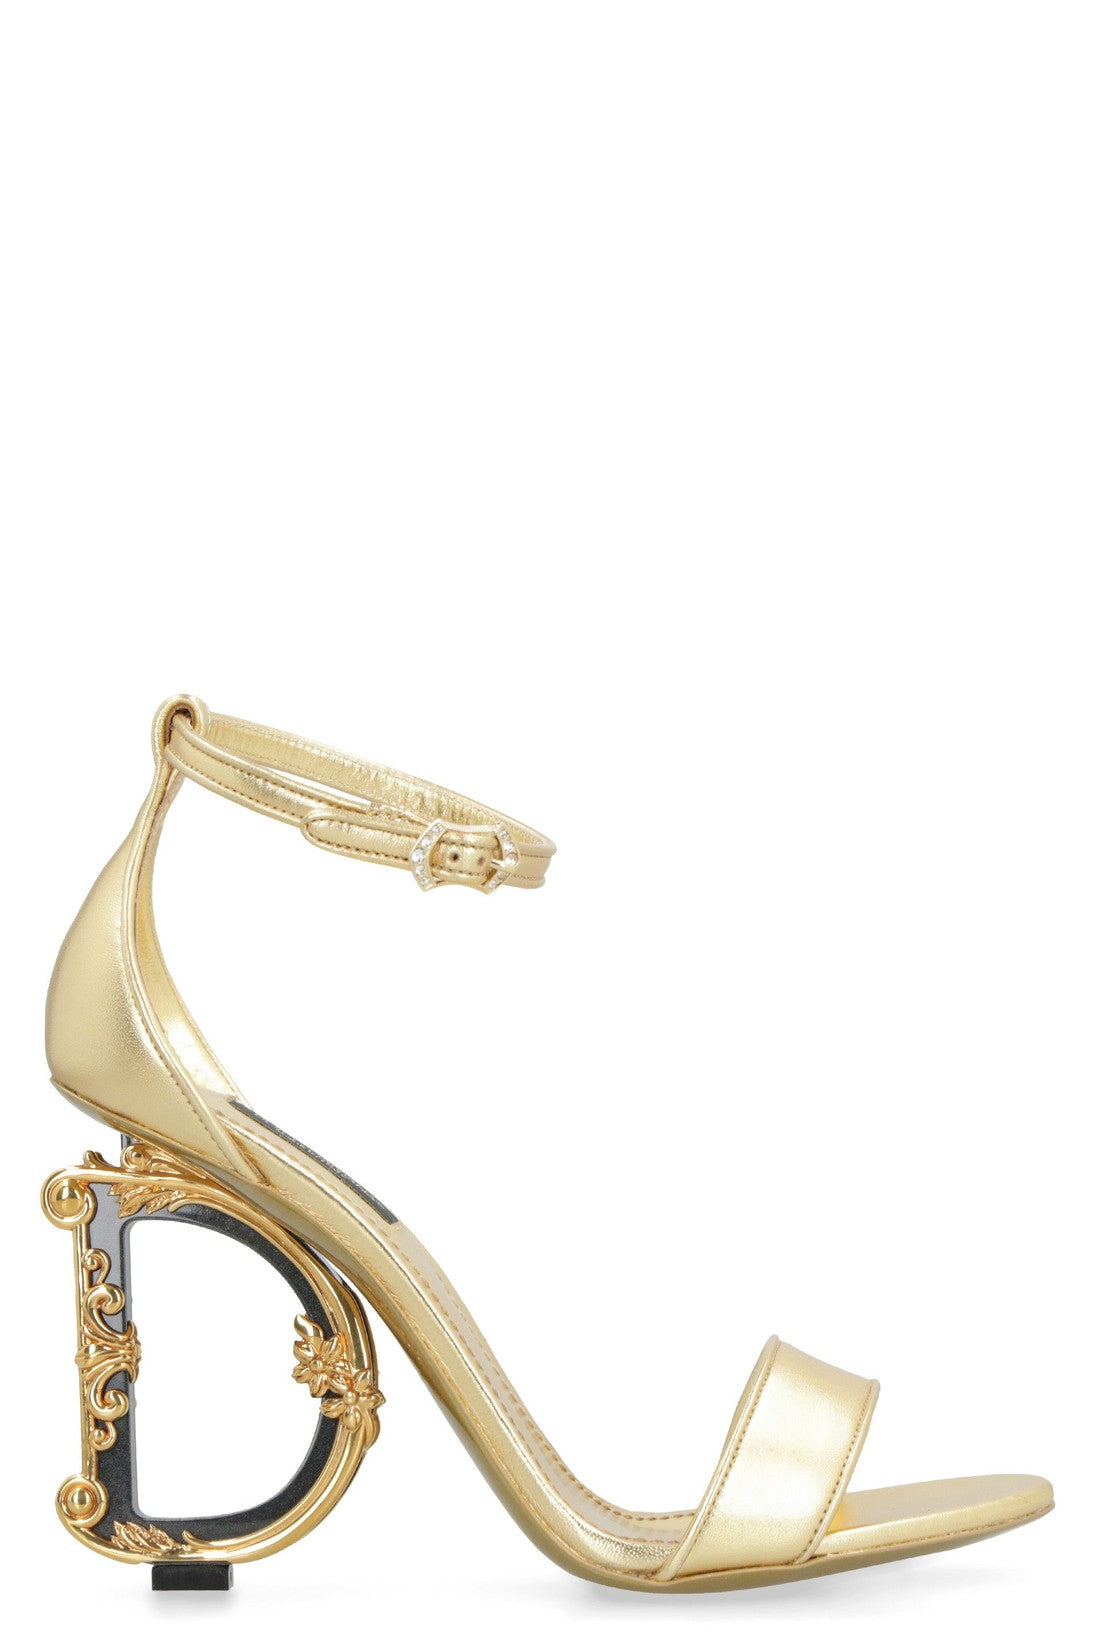 Dolce & Gabbana-OUTLET-SALE-Keira metallic leather sandals-ARCHIVIST